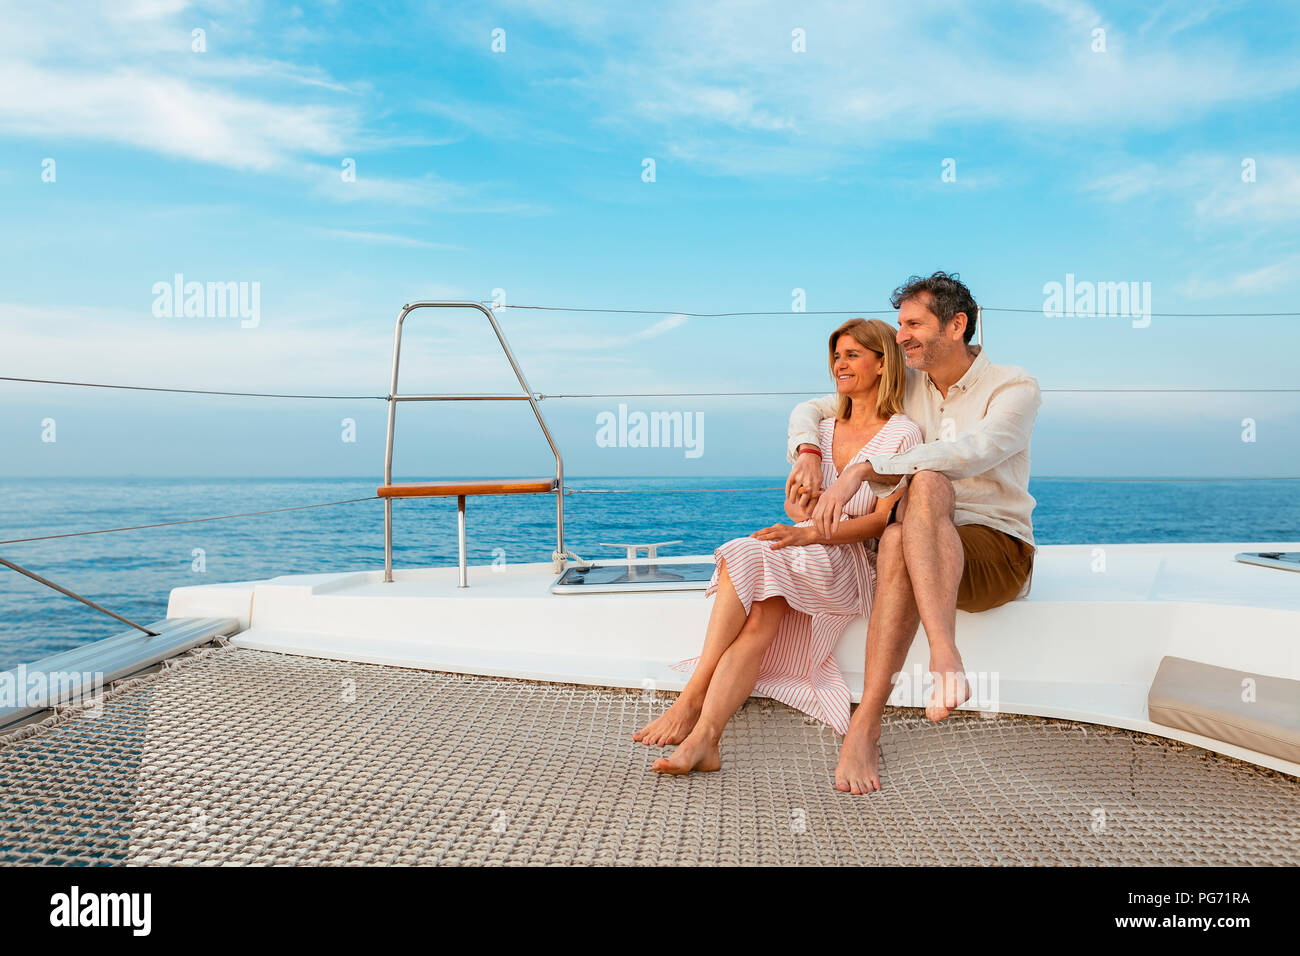 Mature couple enjoying quality time on sailing trip on a catamaran Stock Photo